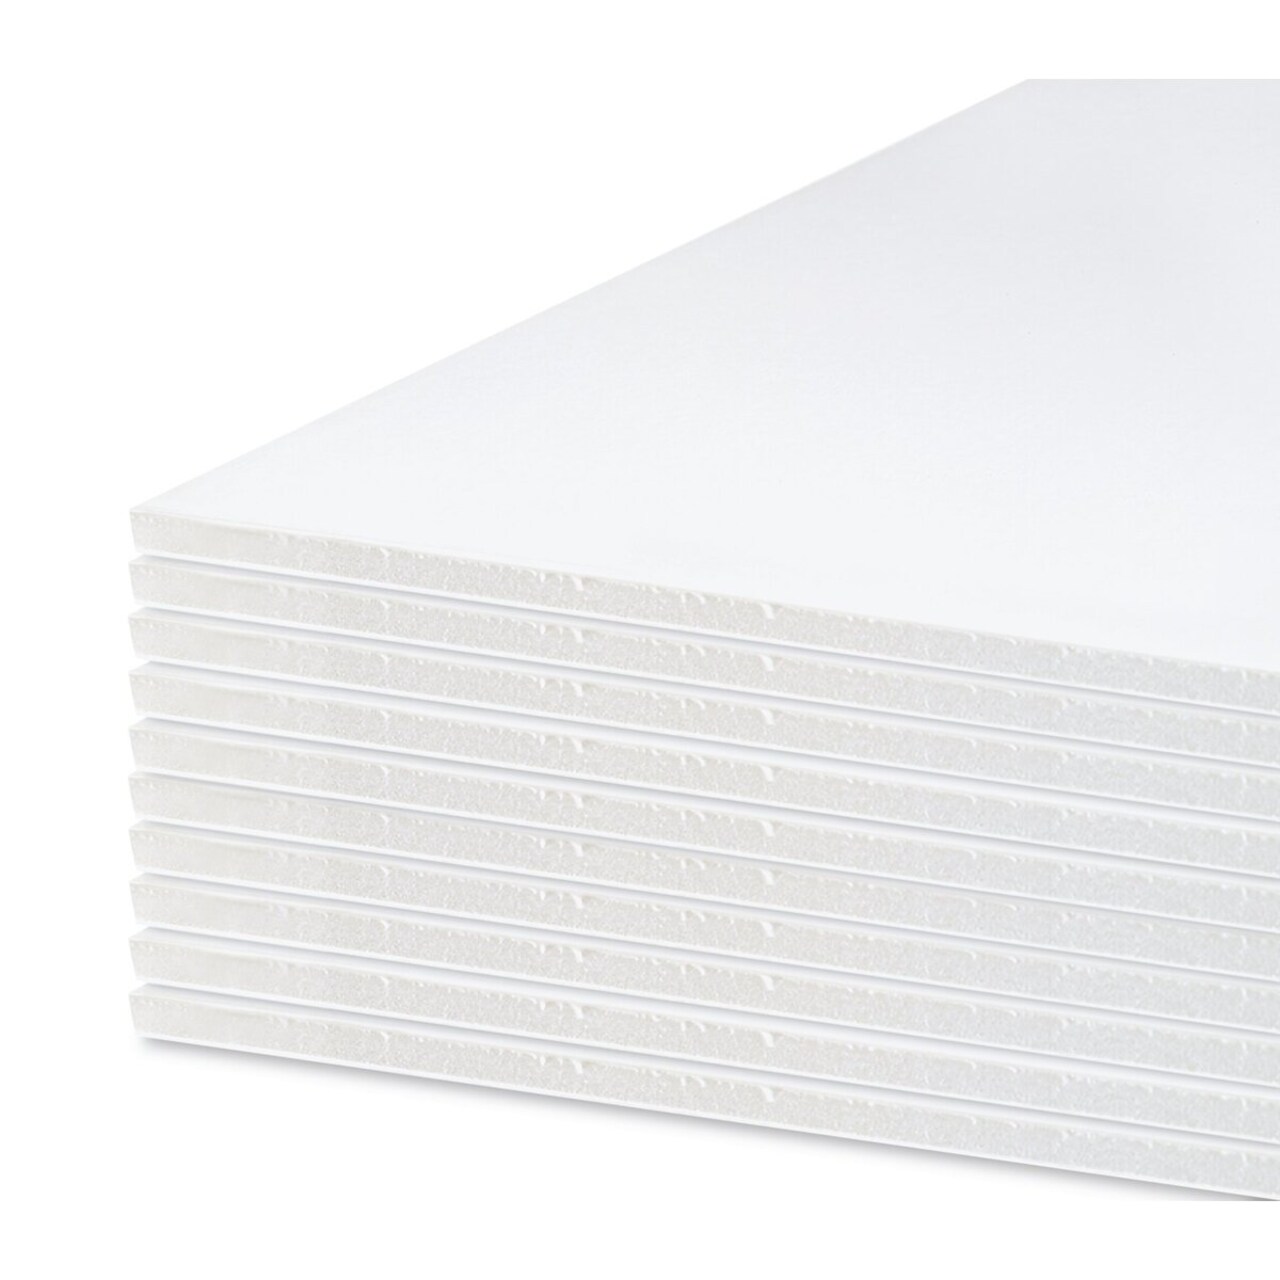 Buy Foam Board - White 24x36 (10 Sheets) at Ubuy India